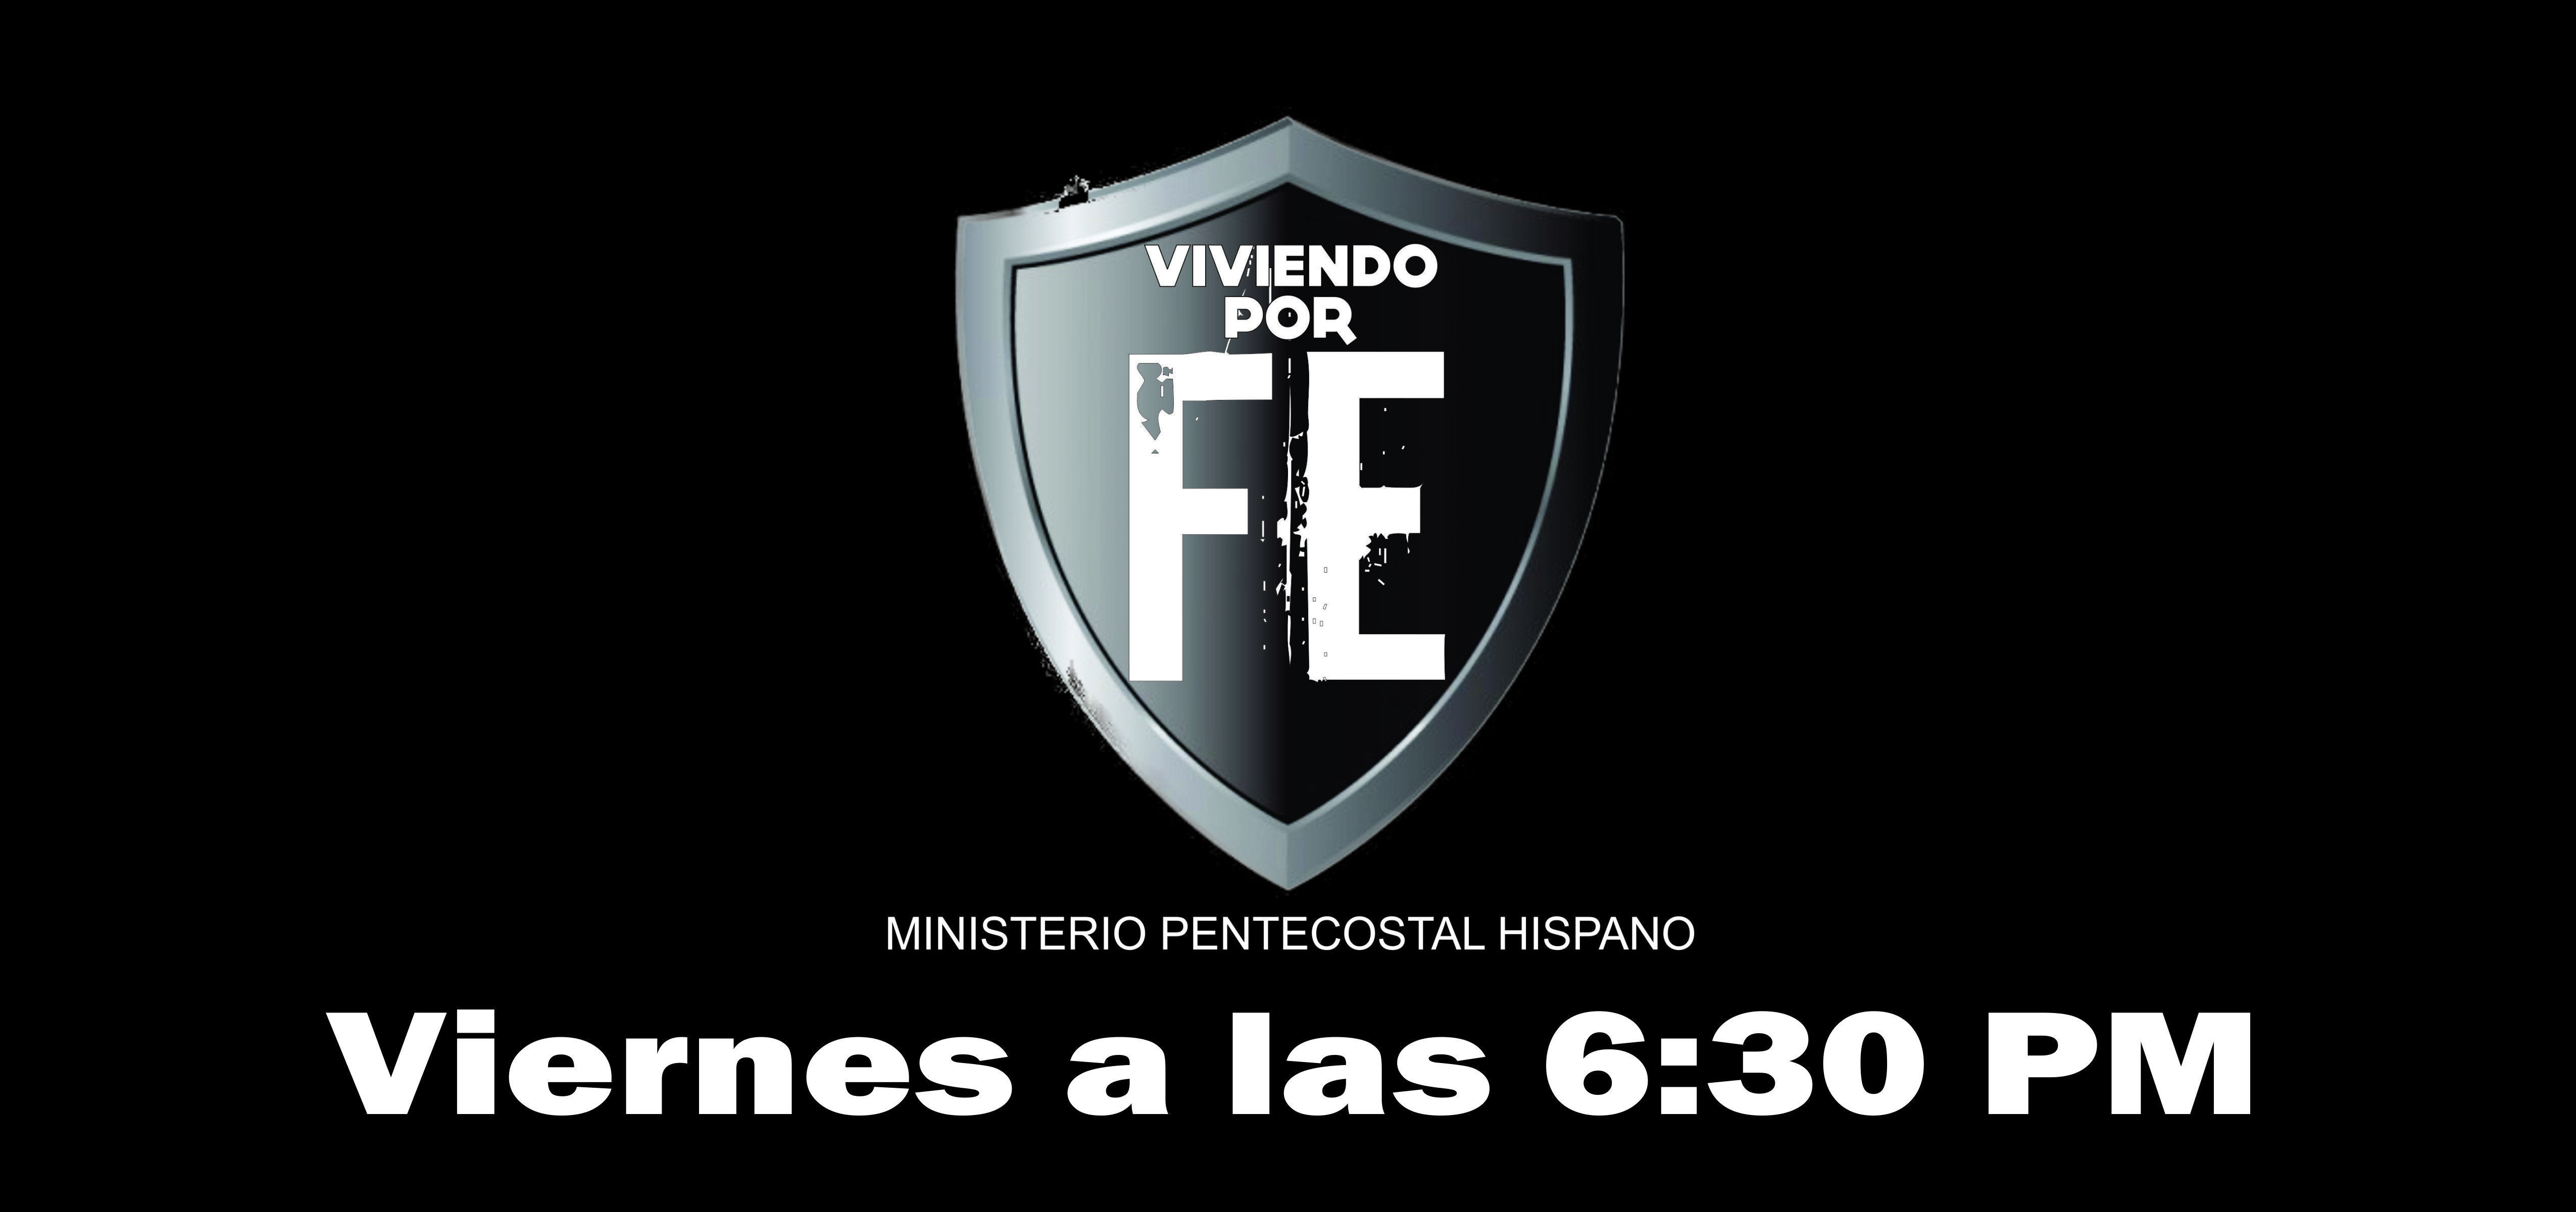 Hispanic Logo - Hispanic Logo and Service time